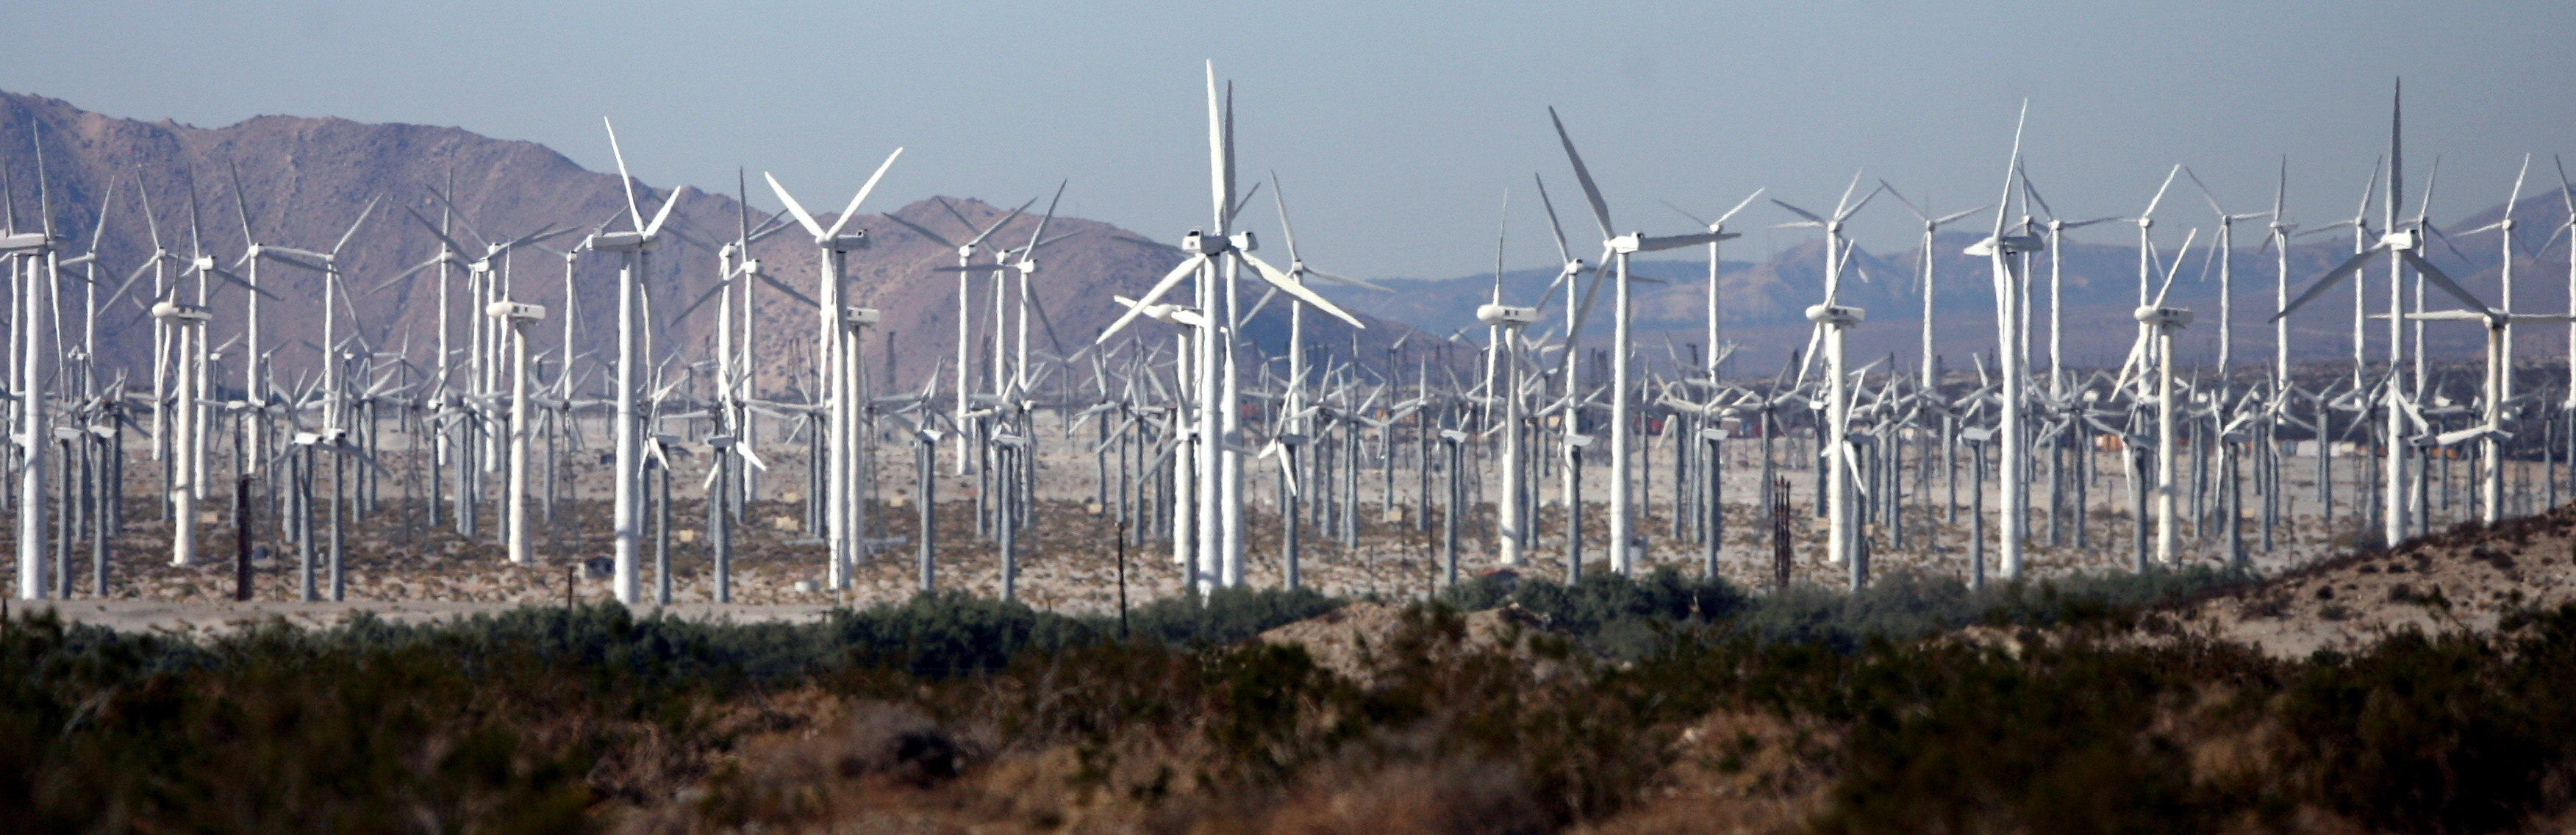 Despite recycling efforts, many older wind turbine blades still